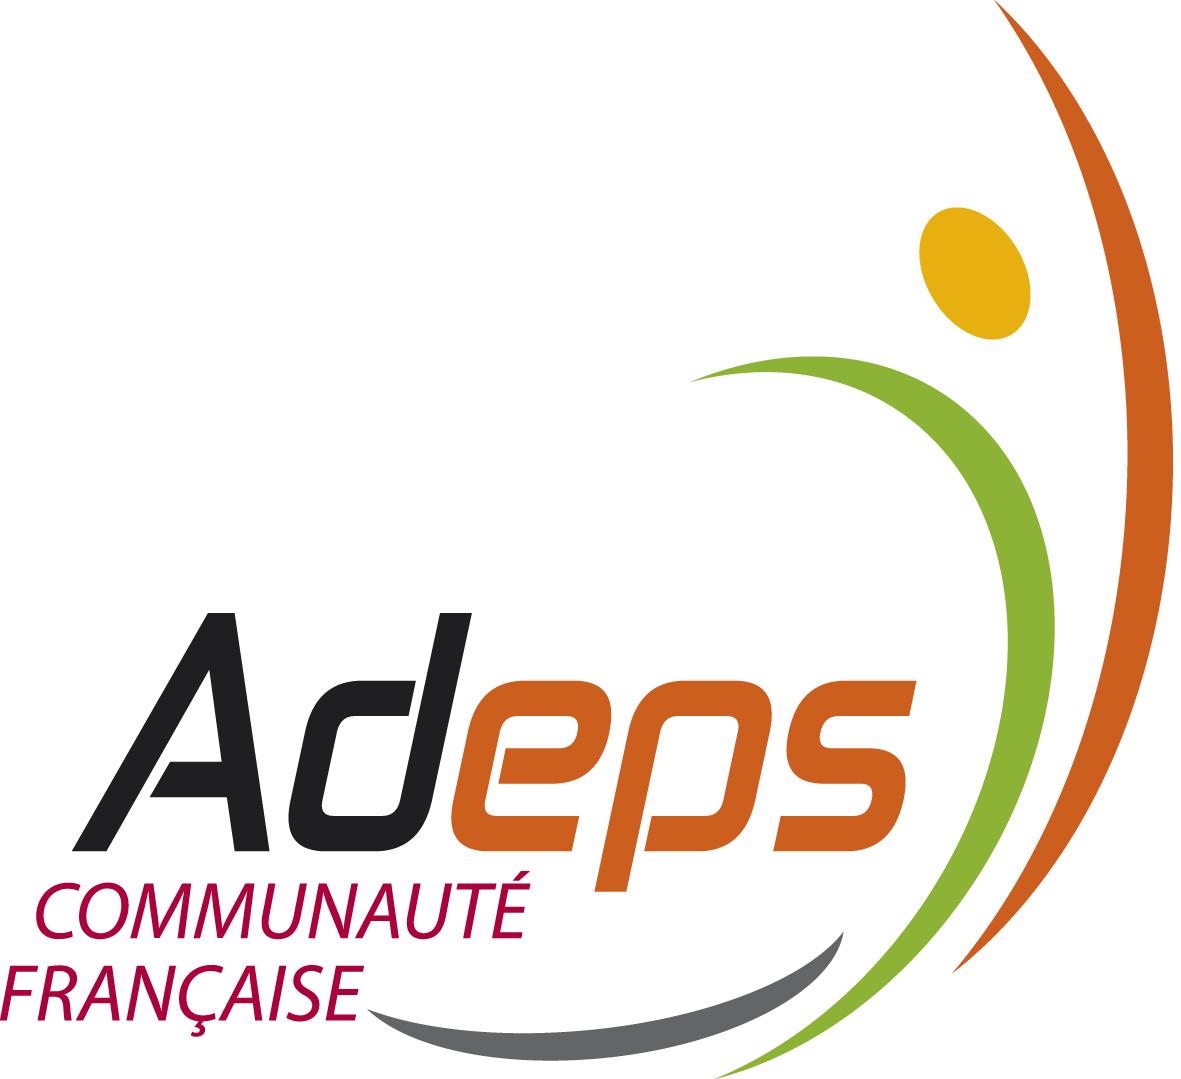 Adeps communaute fr